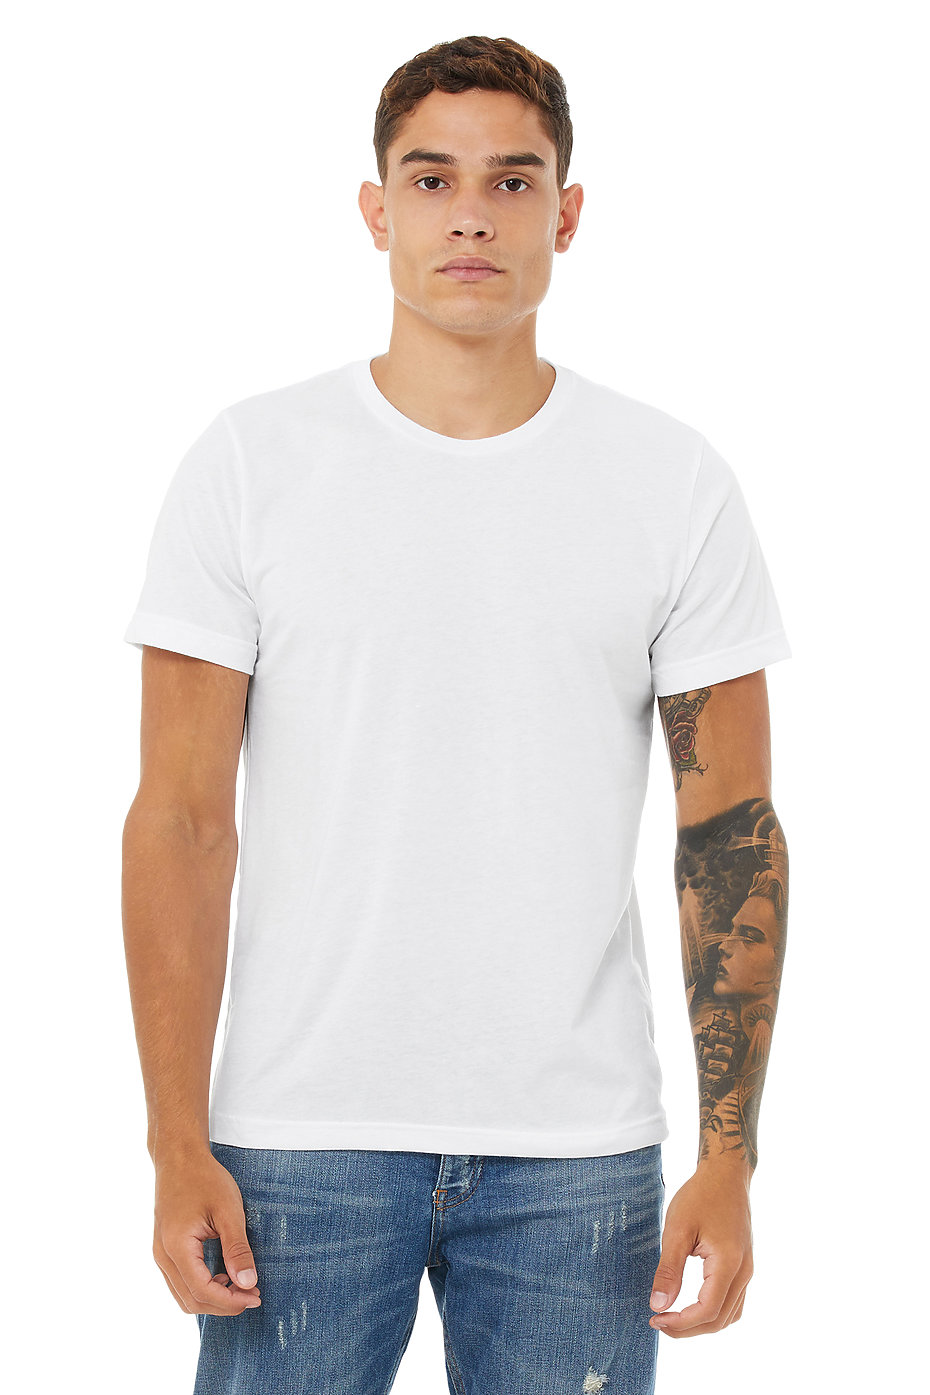 discount 95% Zara Shirt Navy Blue/White M WOMEN FASHION Shirts & T-shirts Embroidery 